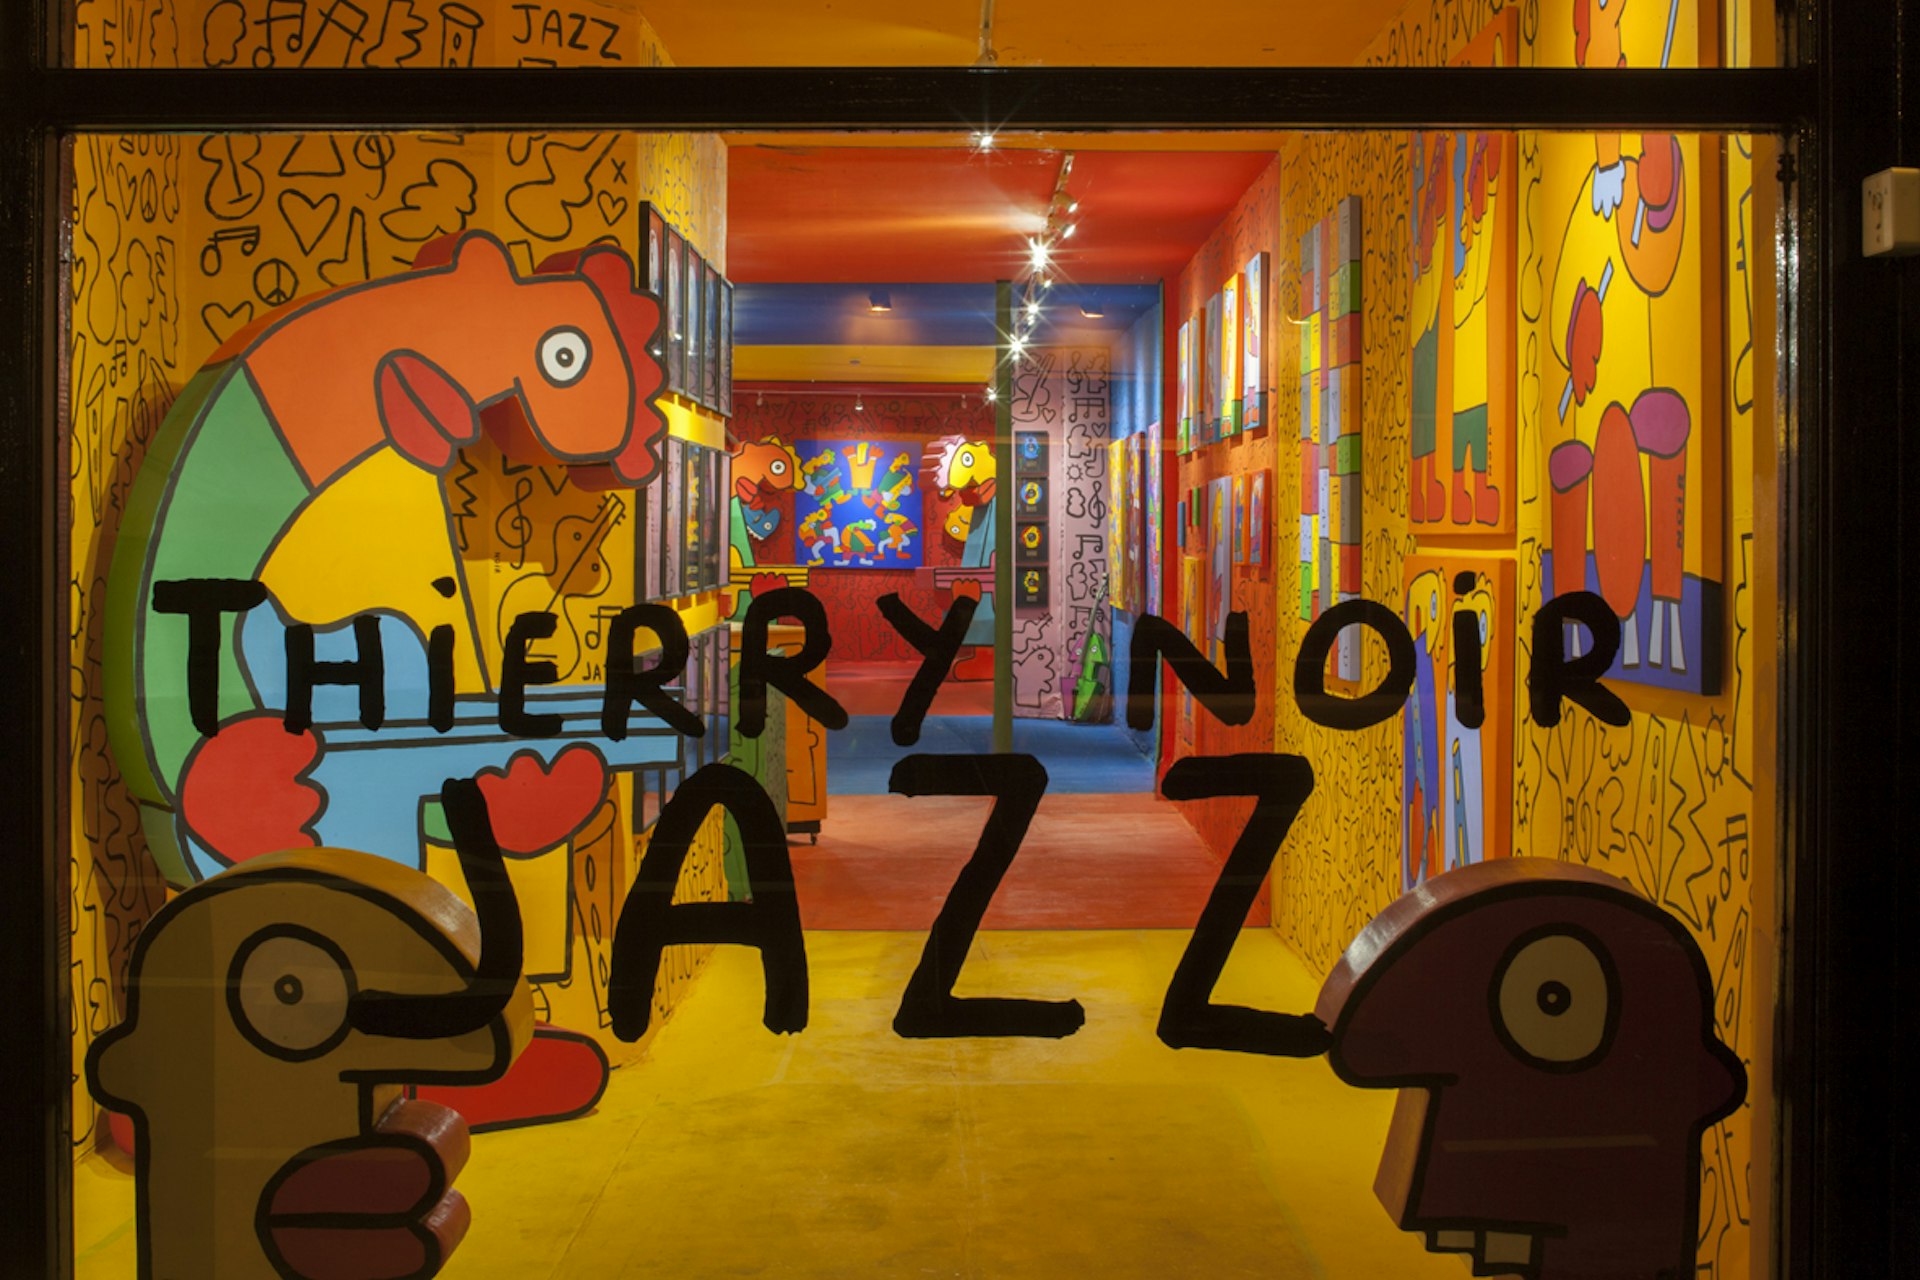 Berlin Wall artist Thierry Noir paints in the key of jazz